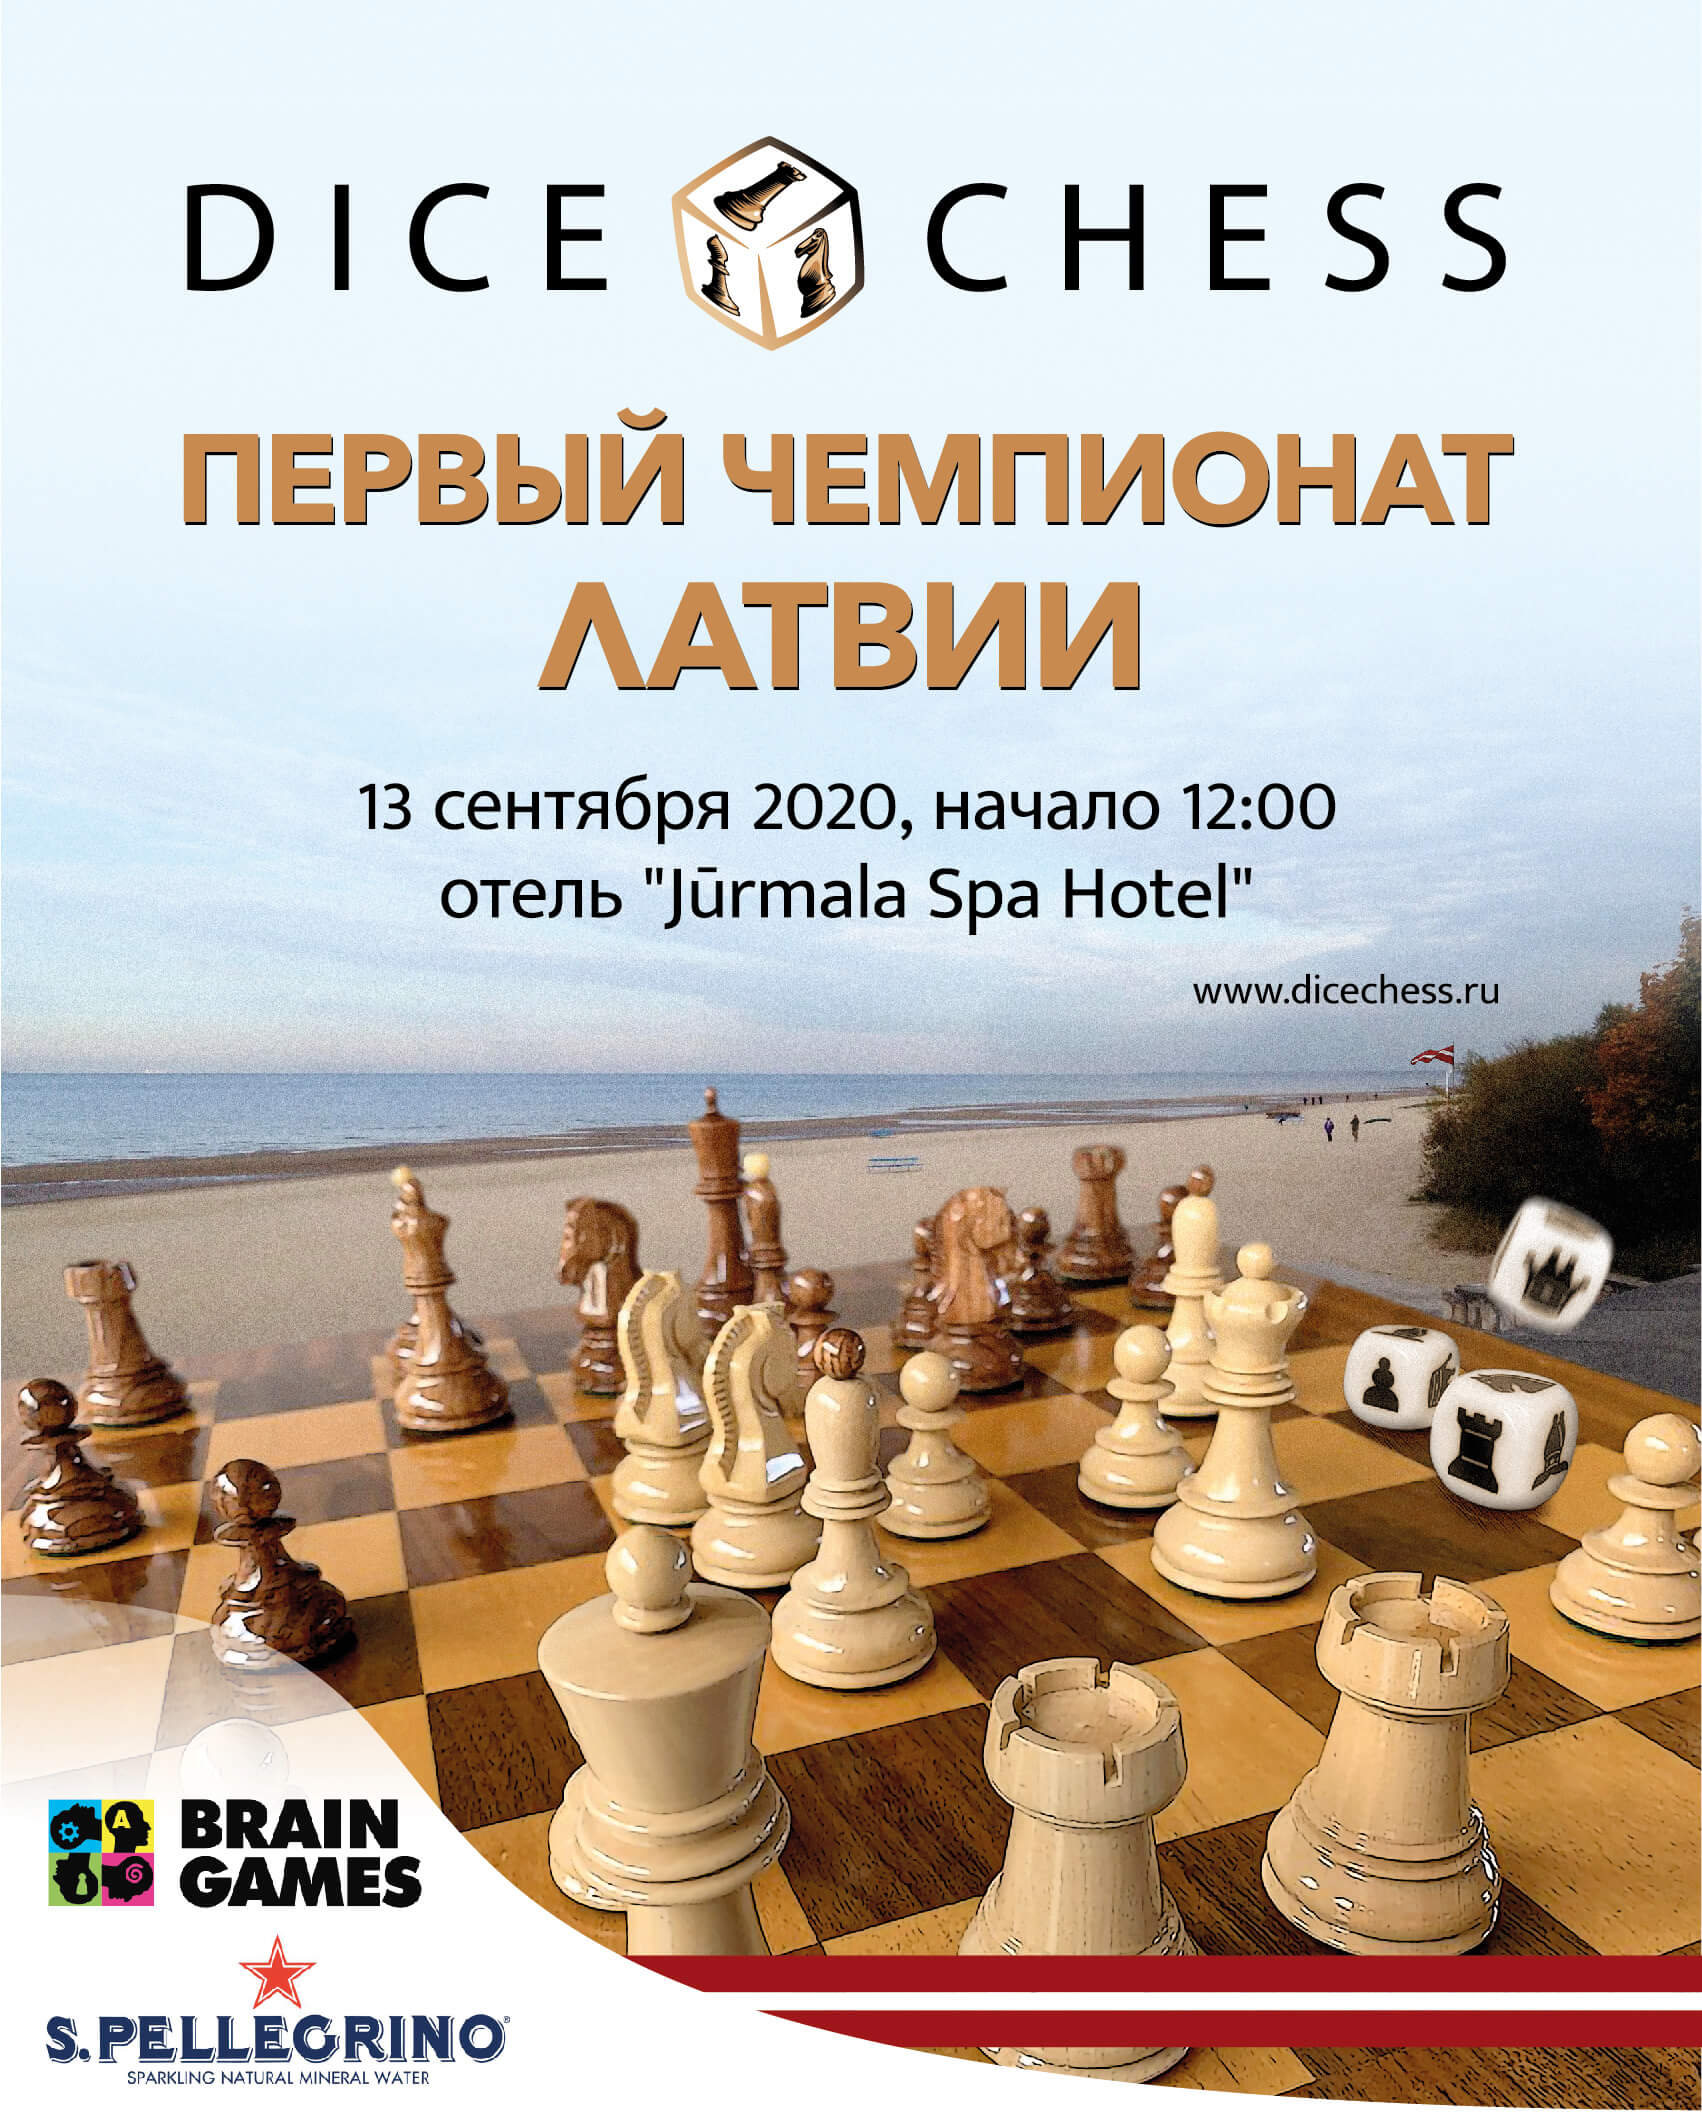 Featured image for Первый чемпионат Латвии по Dice Chess 2020